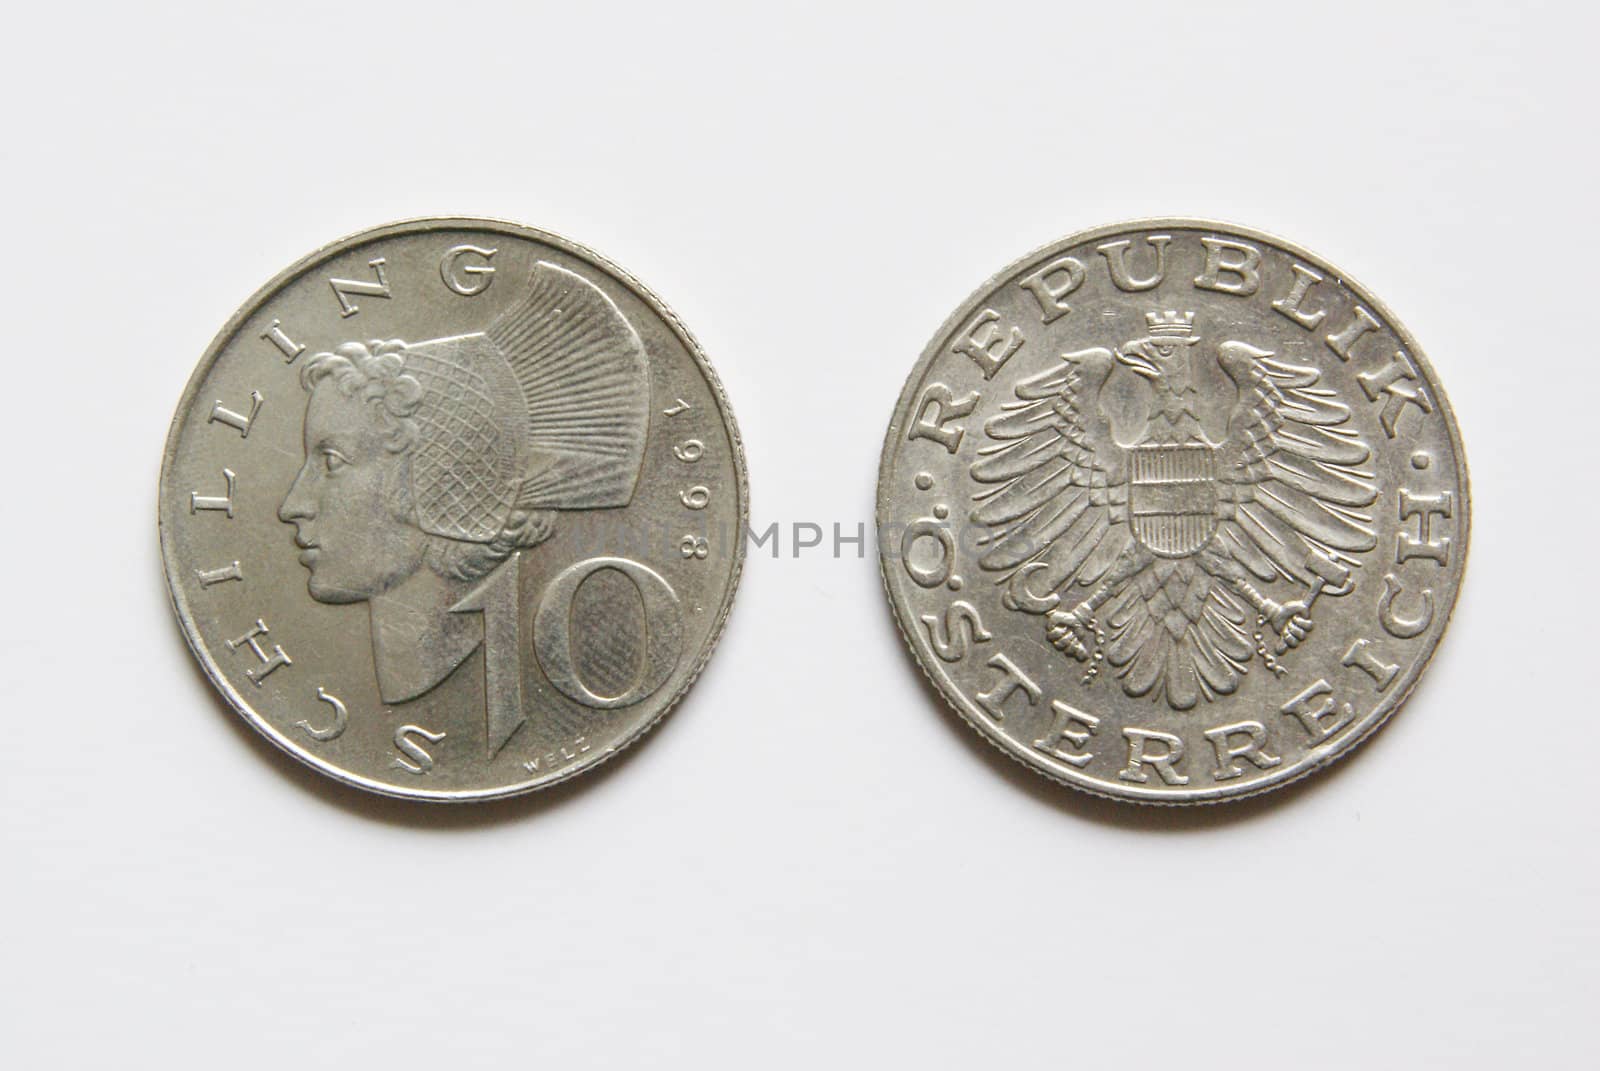 Austrian 10 Schilling coins by calexica